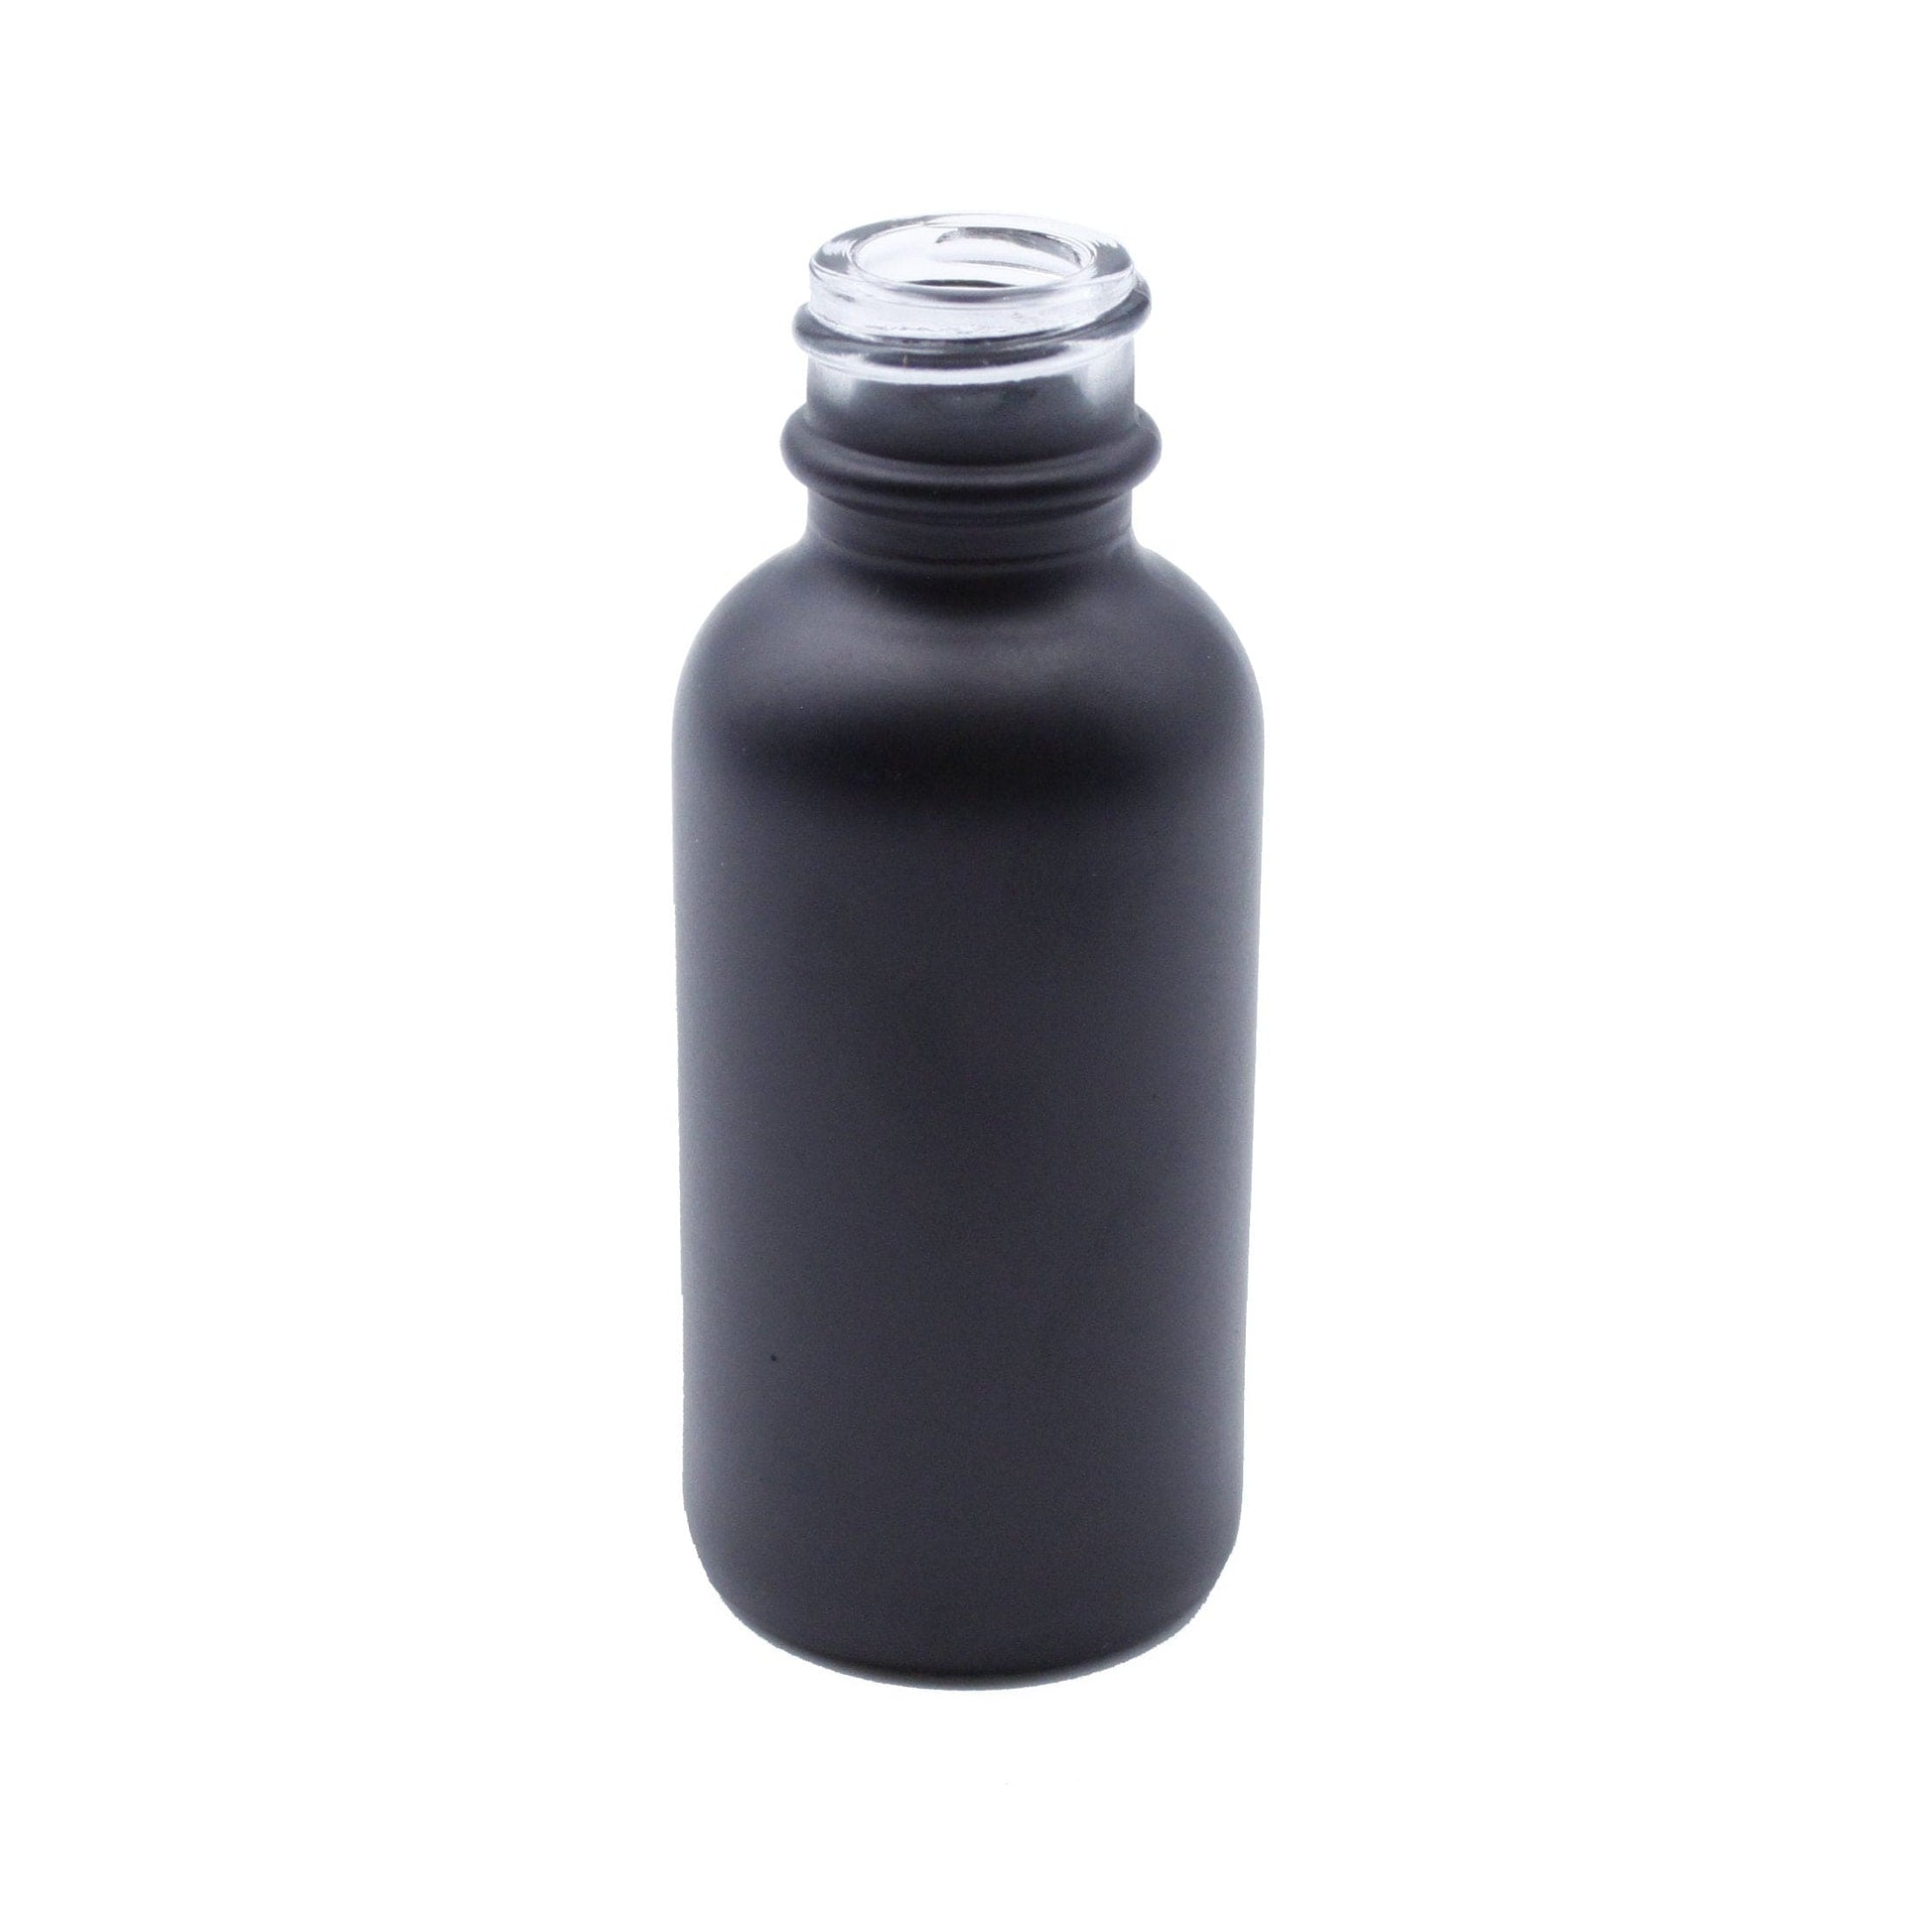 eBottles Black Child-Resistant Glass Dropper Bottle w/ 1.0ml Graduated Dropper | 1 oz